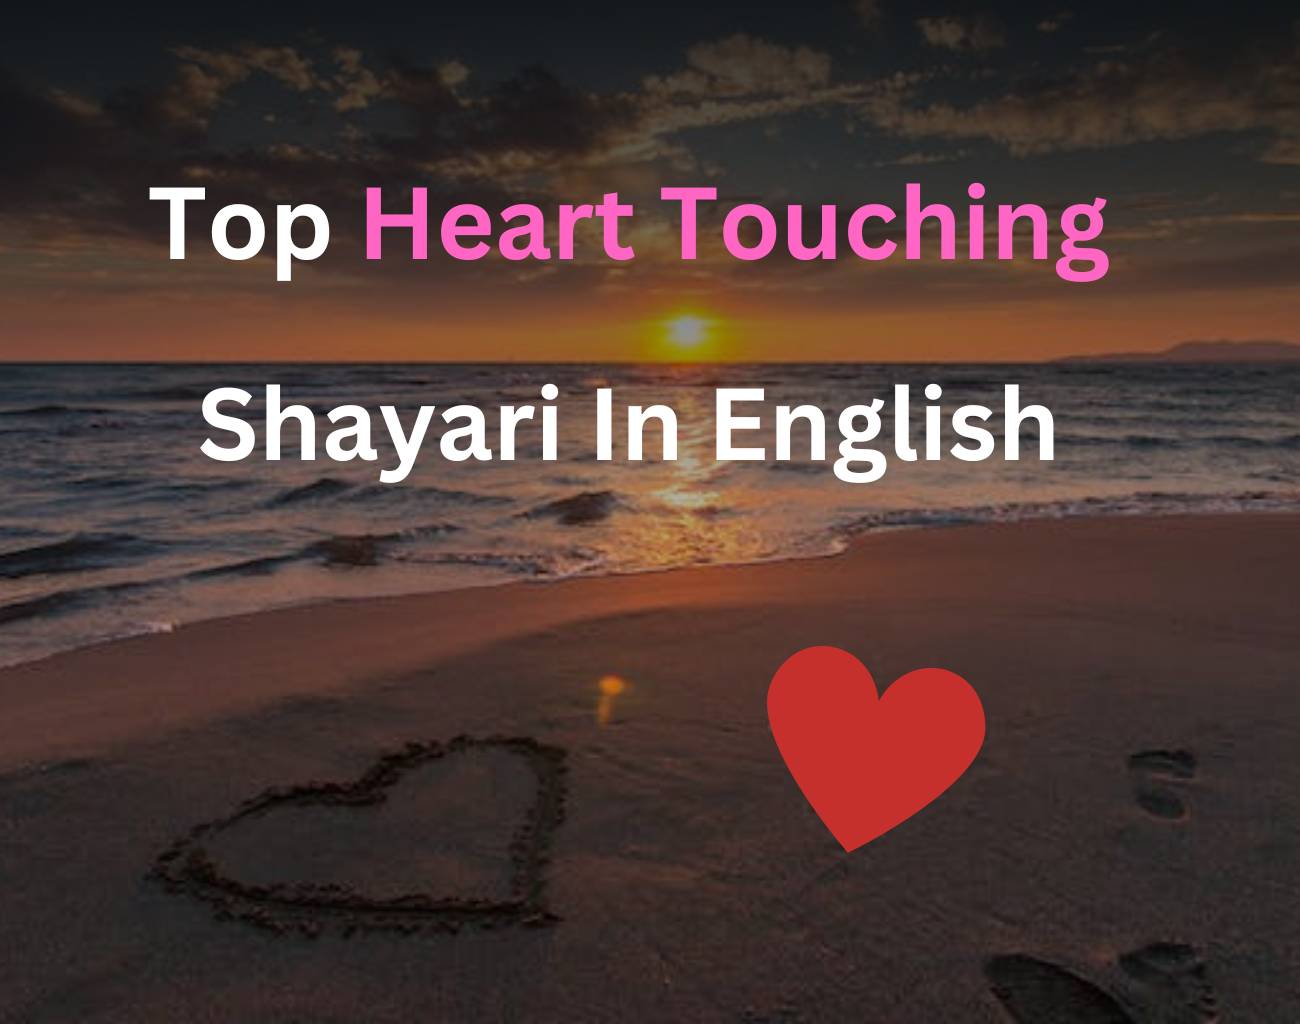 Heart Touching Shayari In English